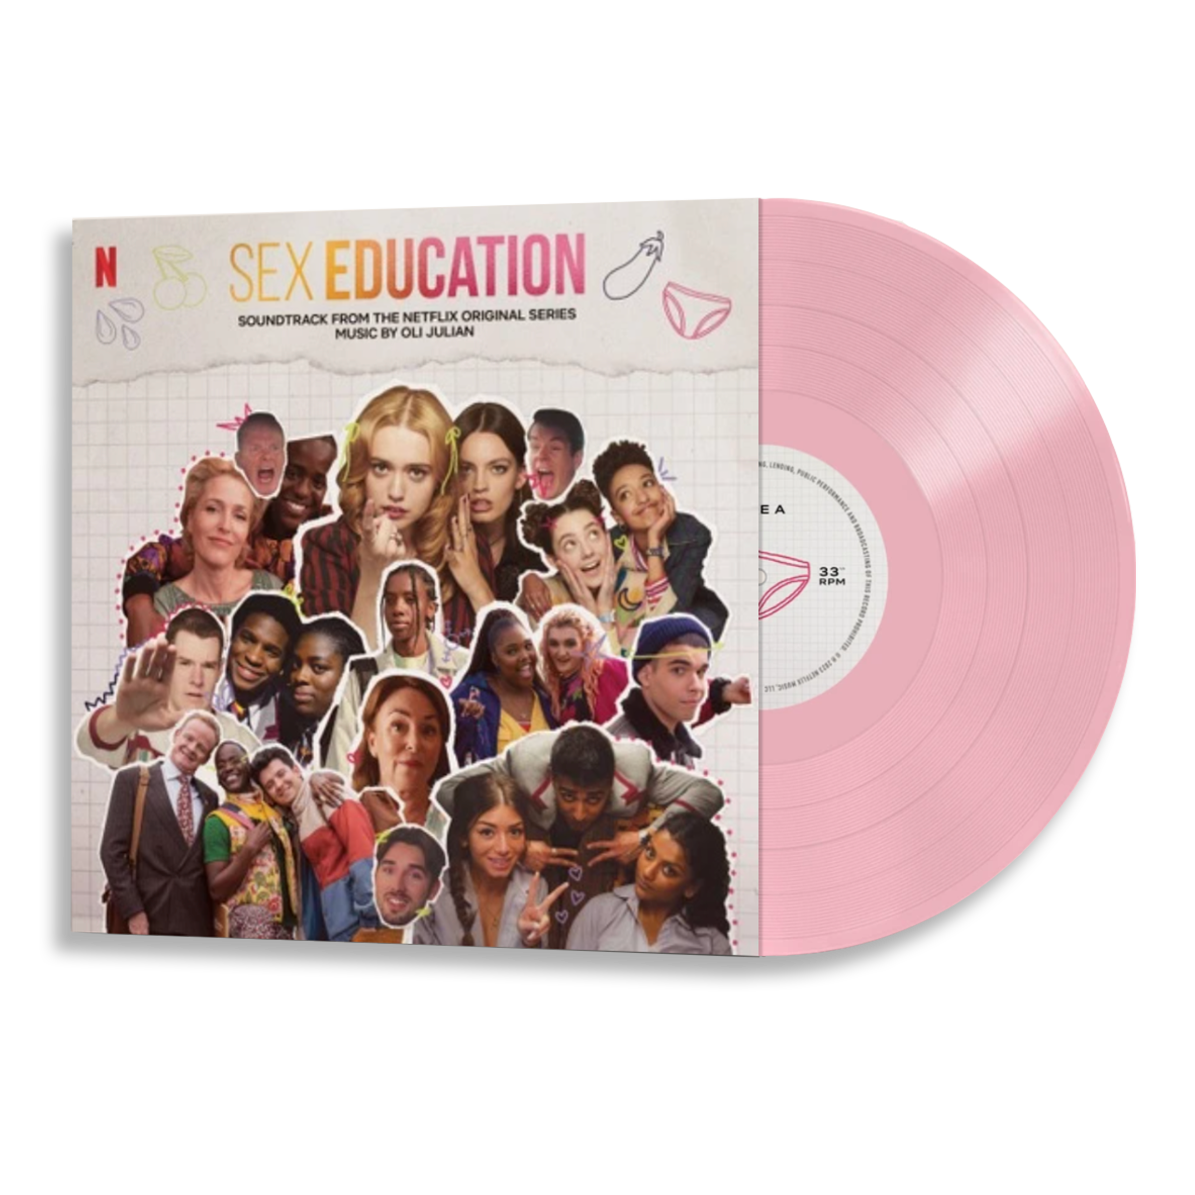 Oli Julian - Sex Education. (Soundtrack from the Netflix Series): Limited Pink Vinyl LP